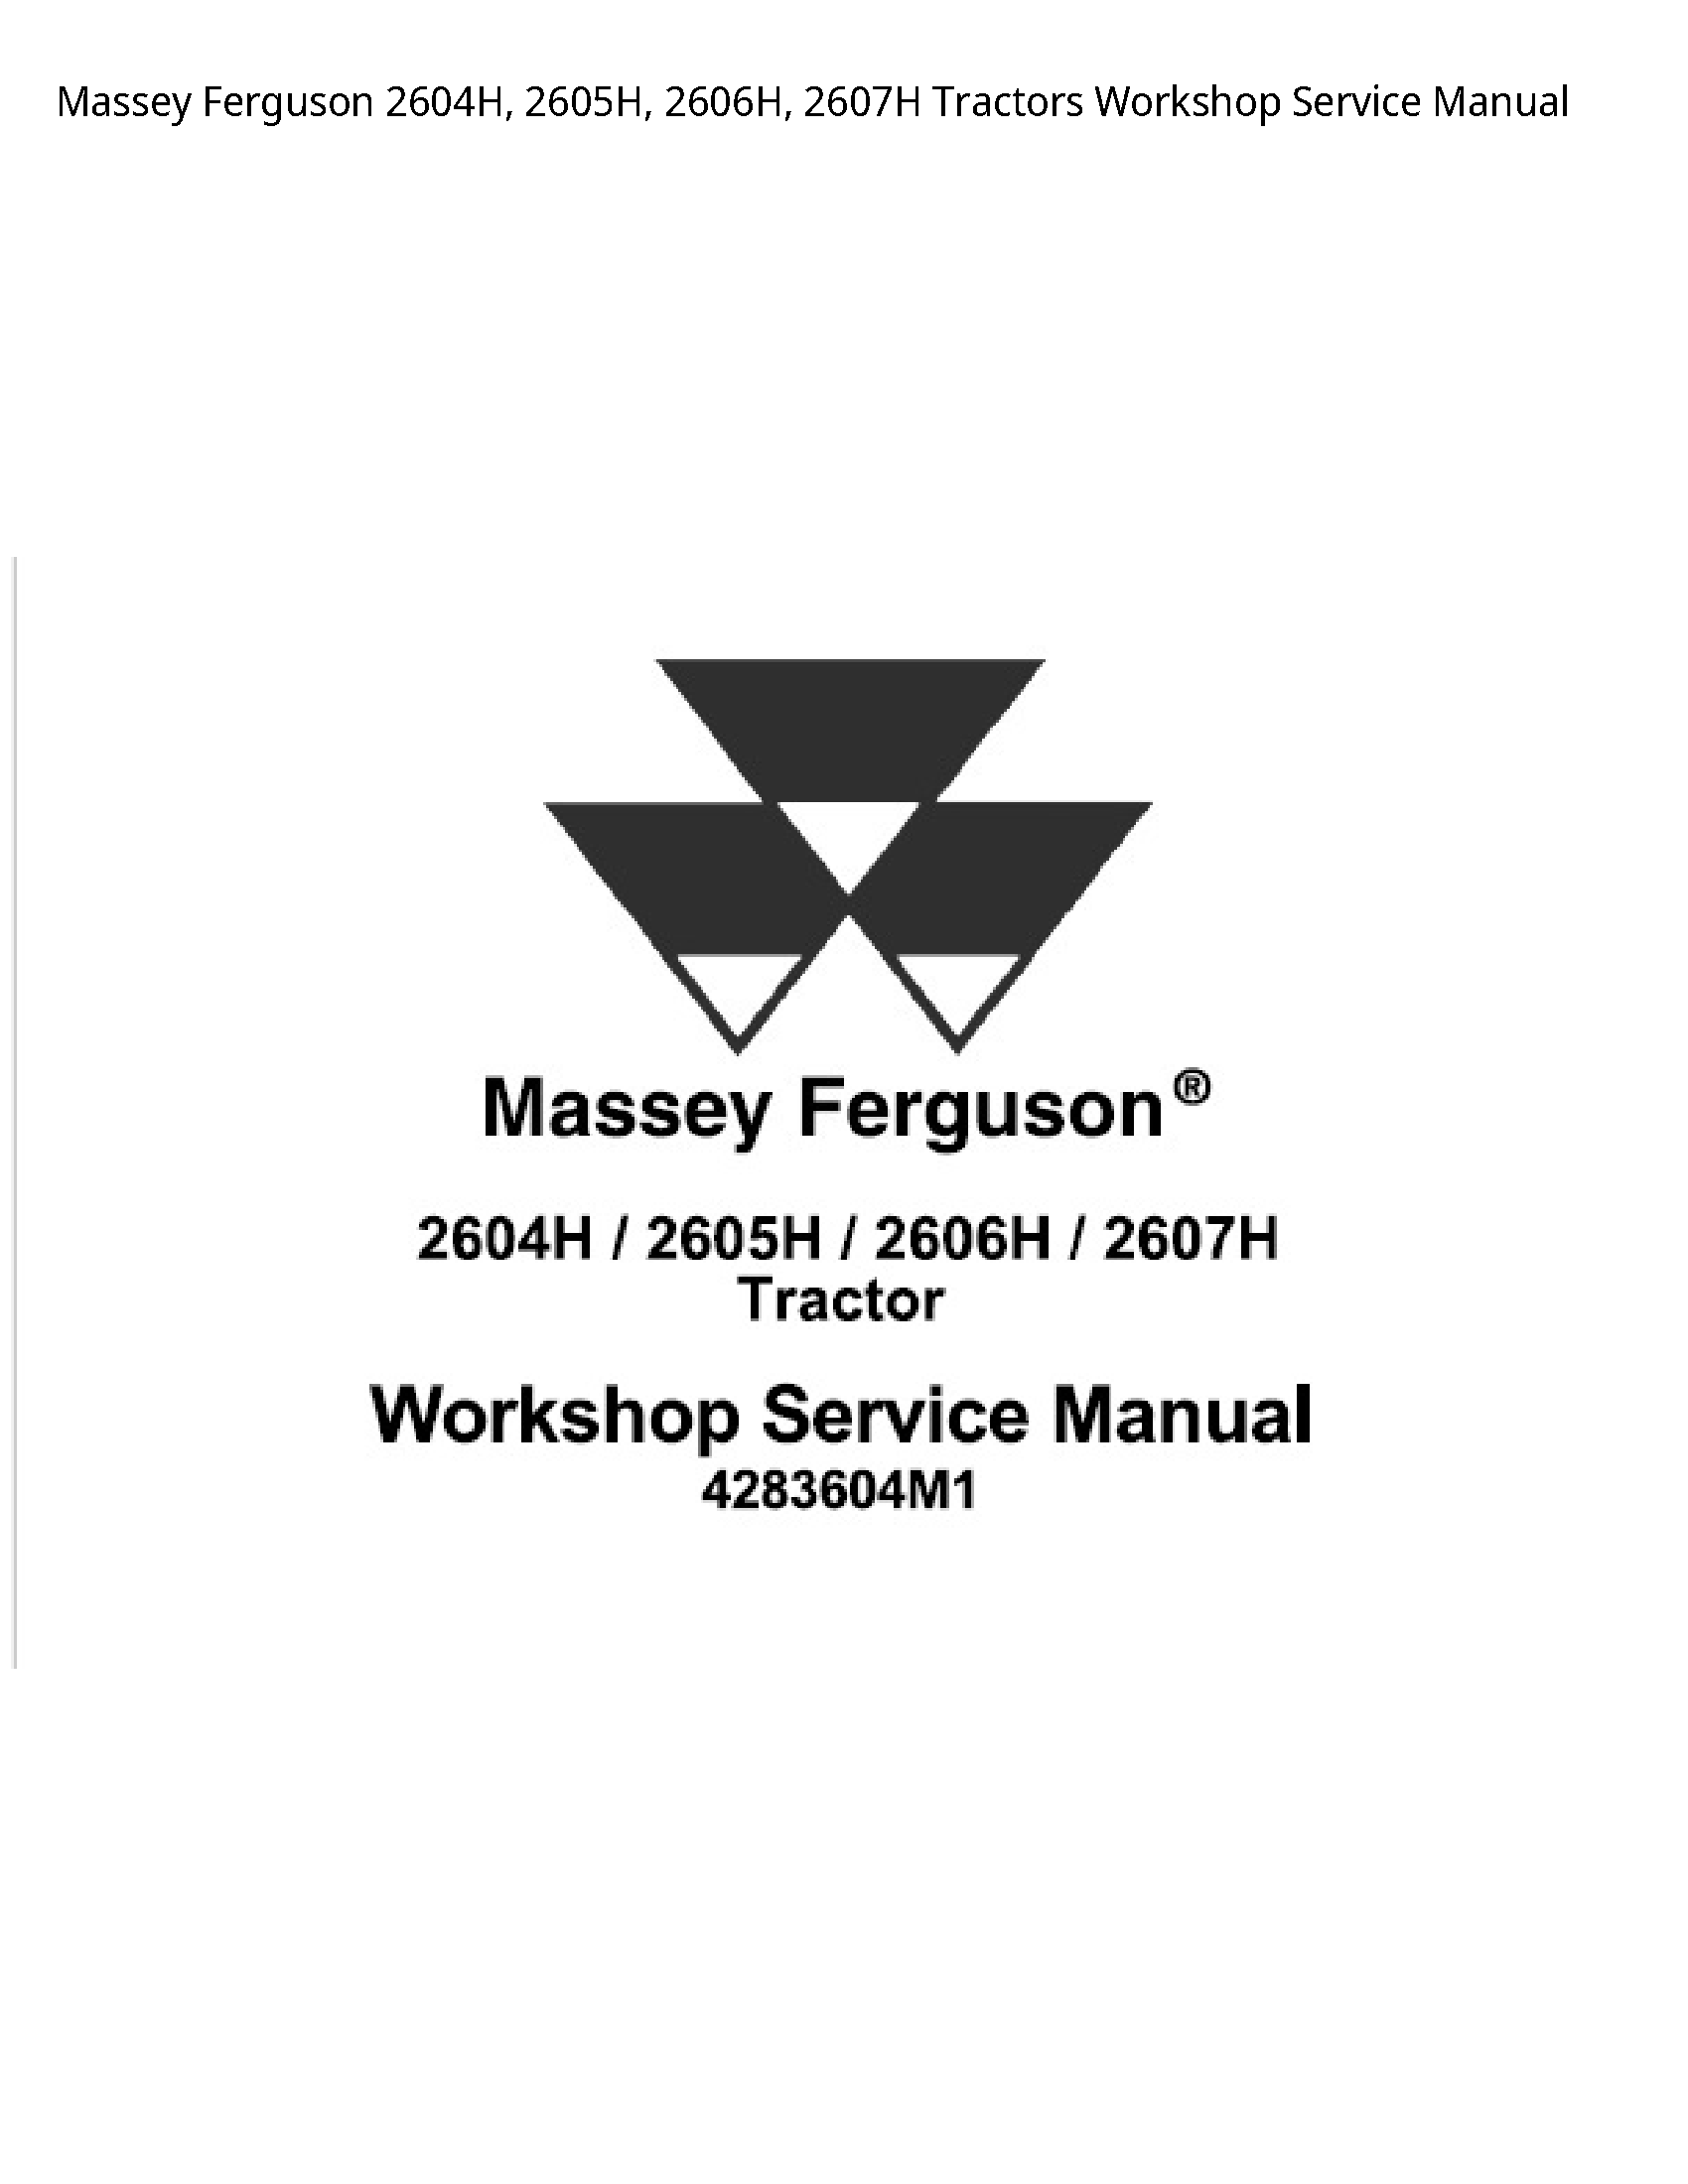 Massey Ferguson 2604H Tractors Service manual